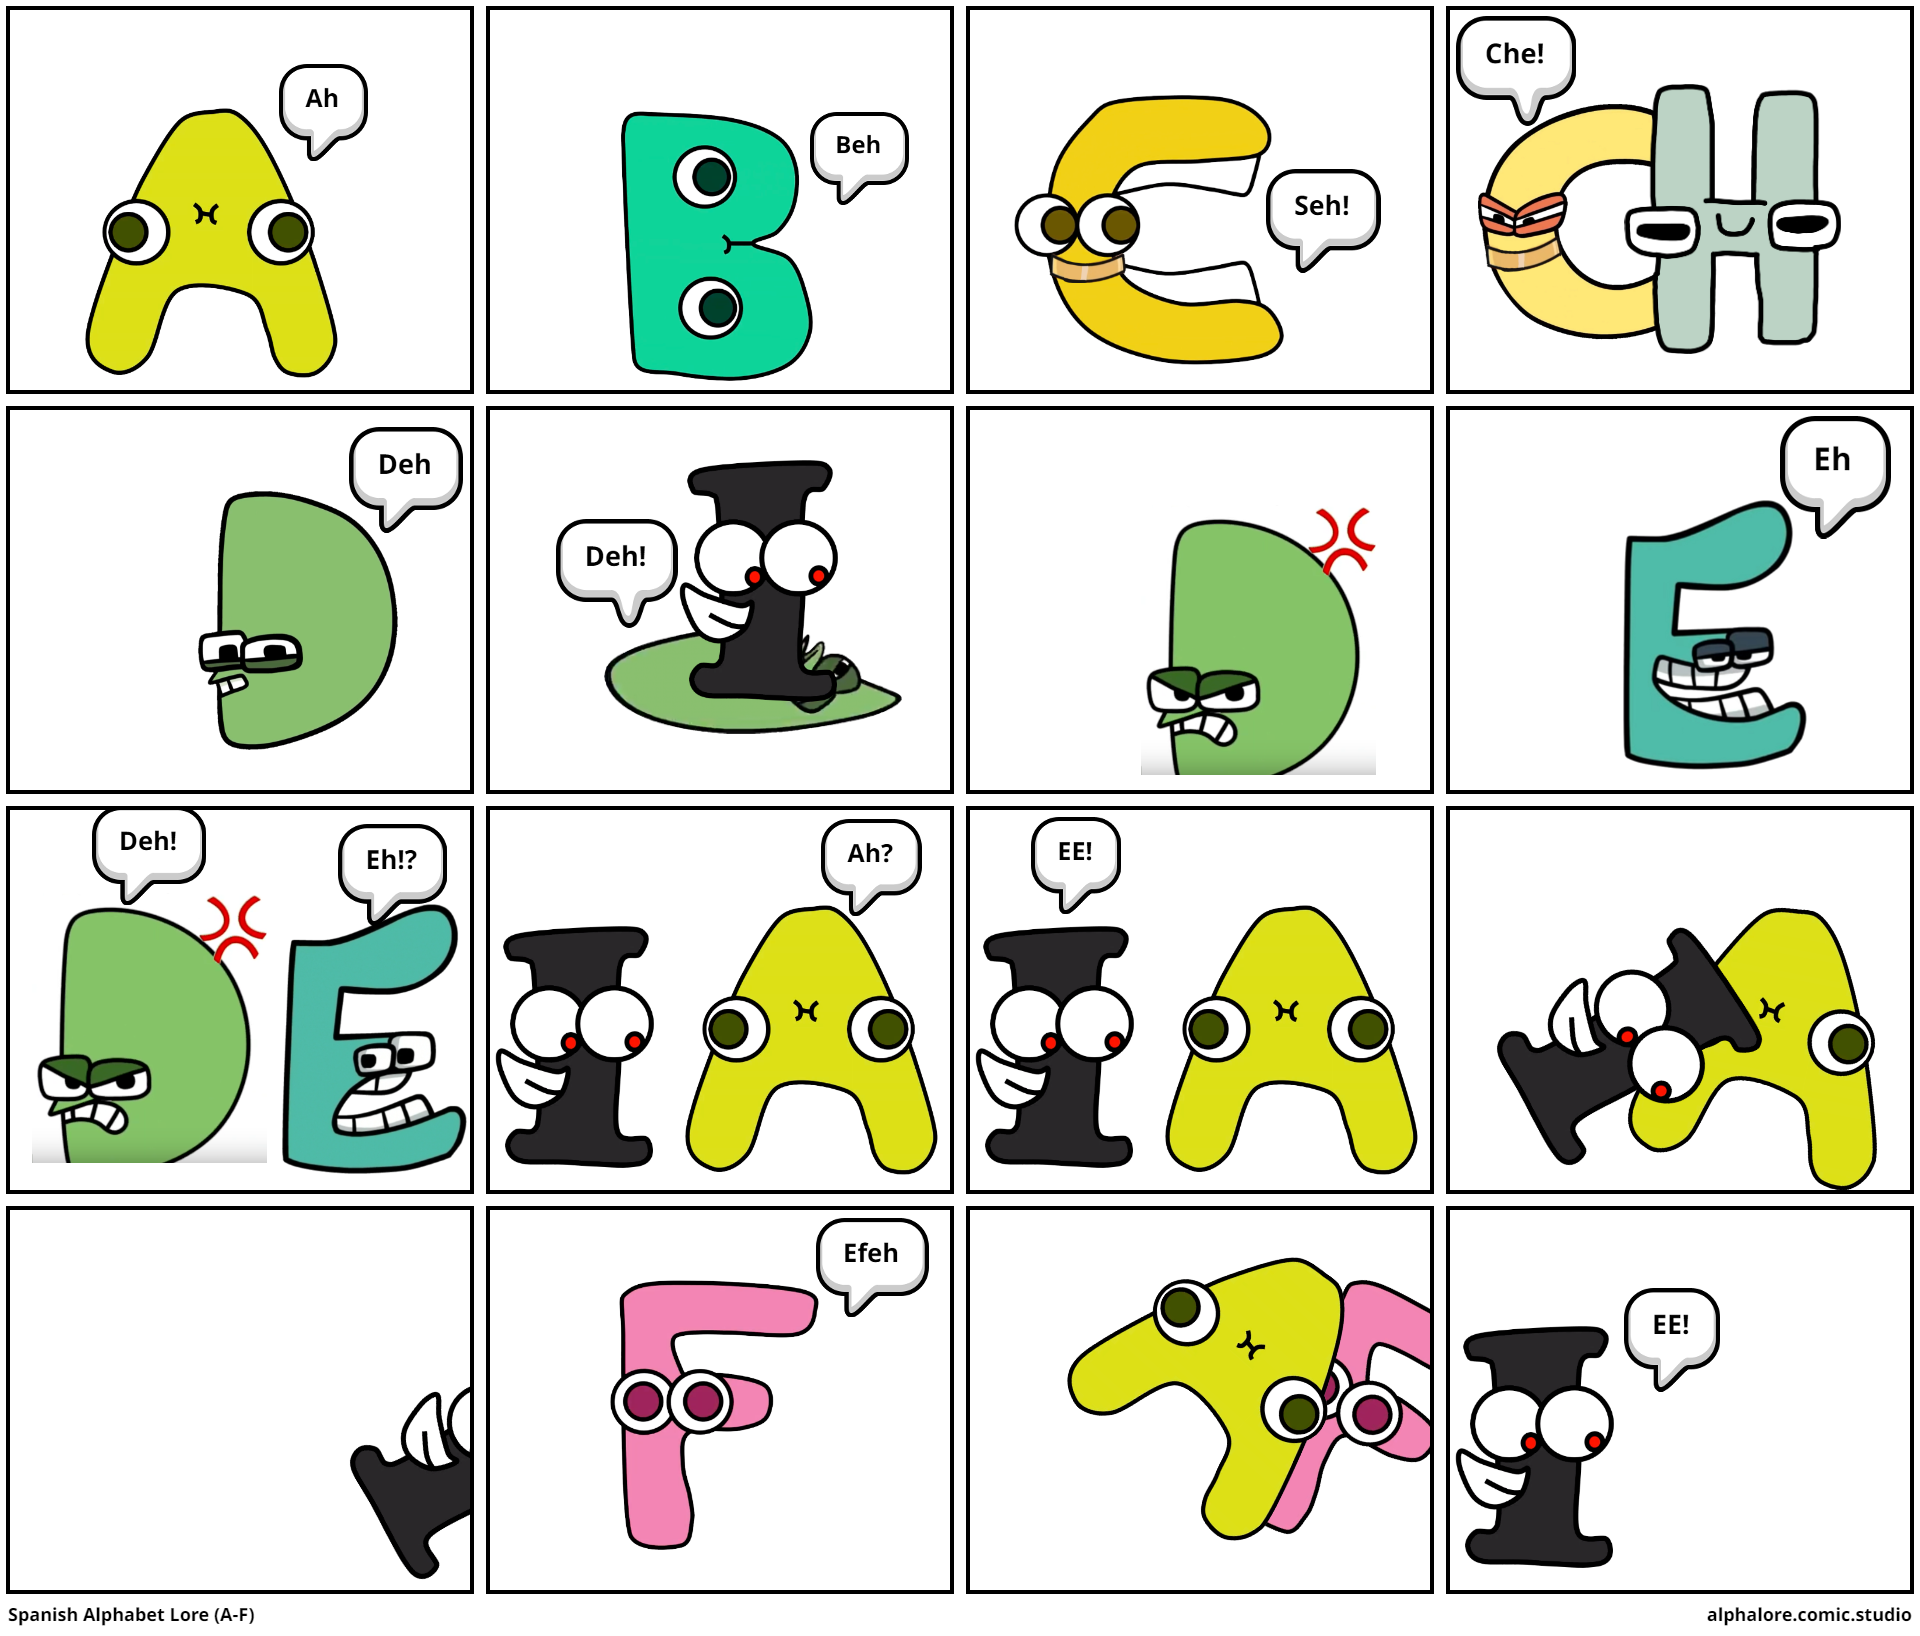 Spanish alphabet lore N. - Comic Studio